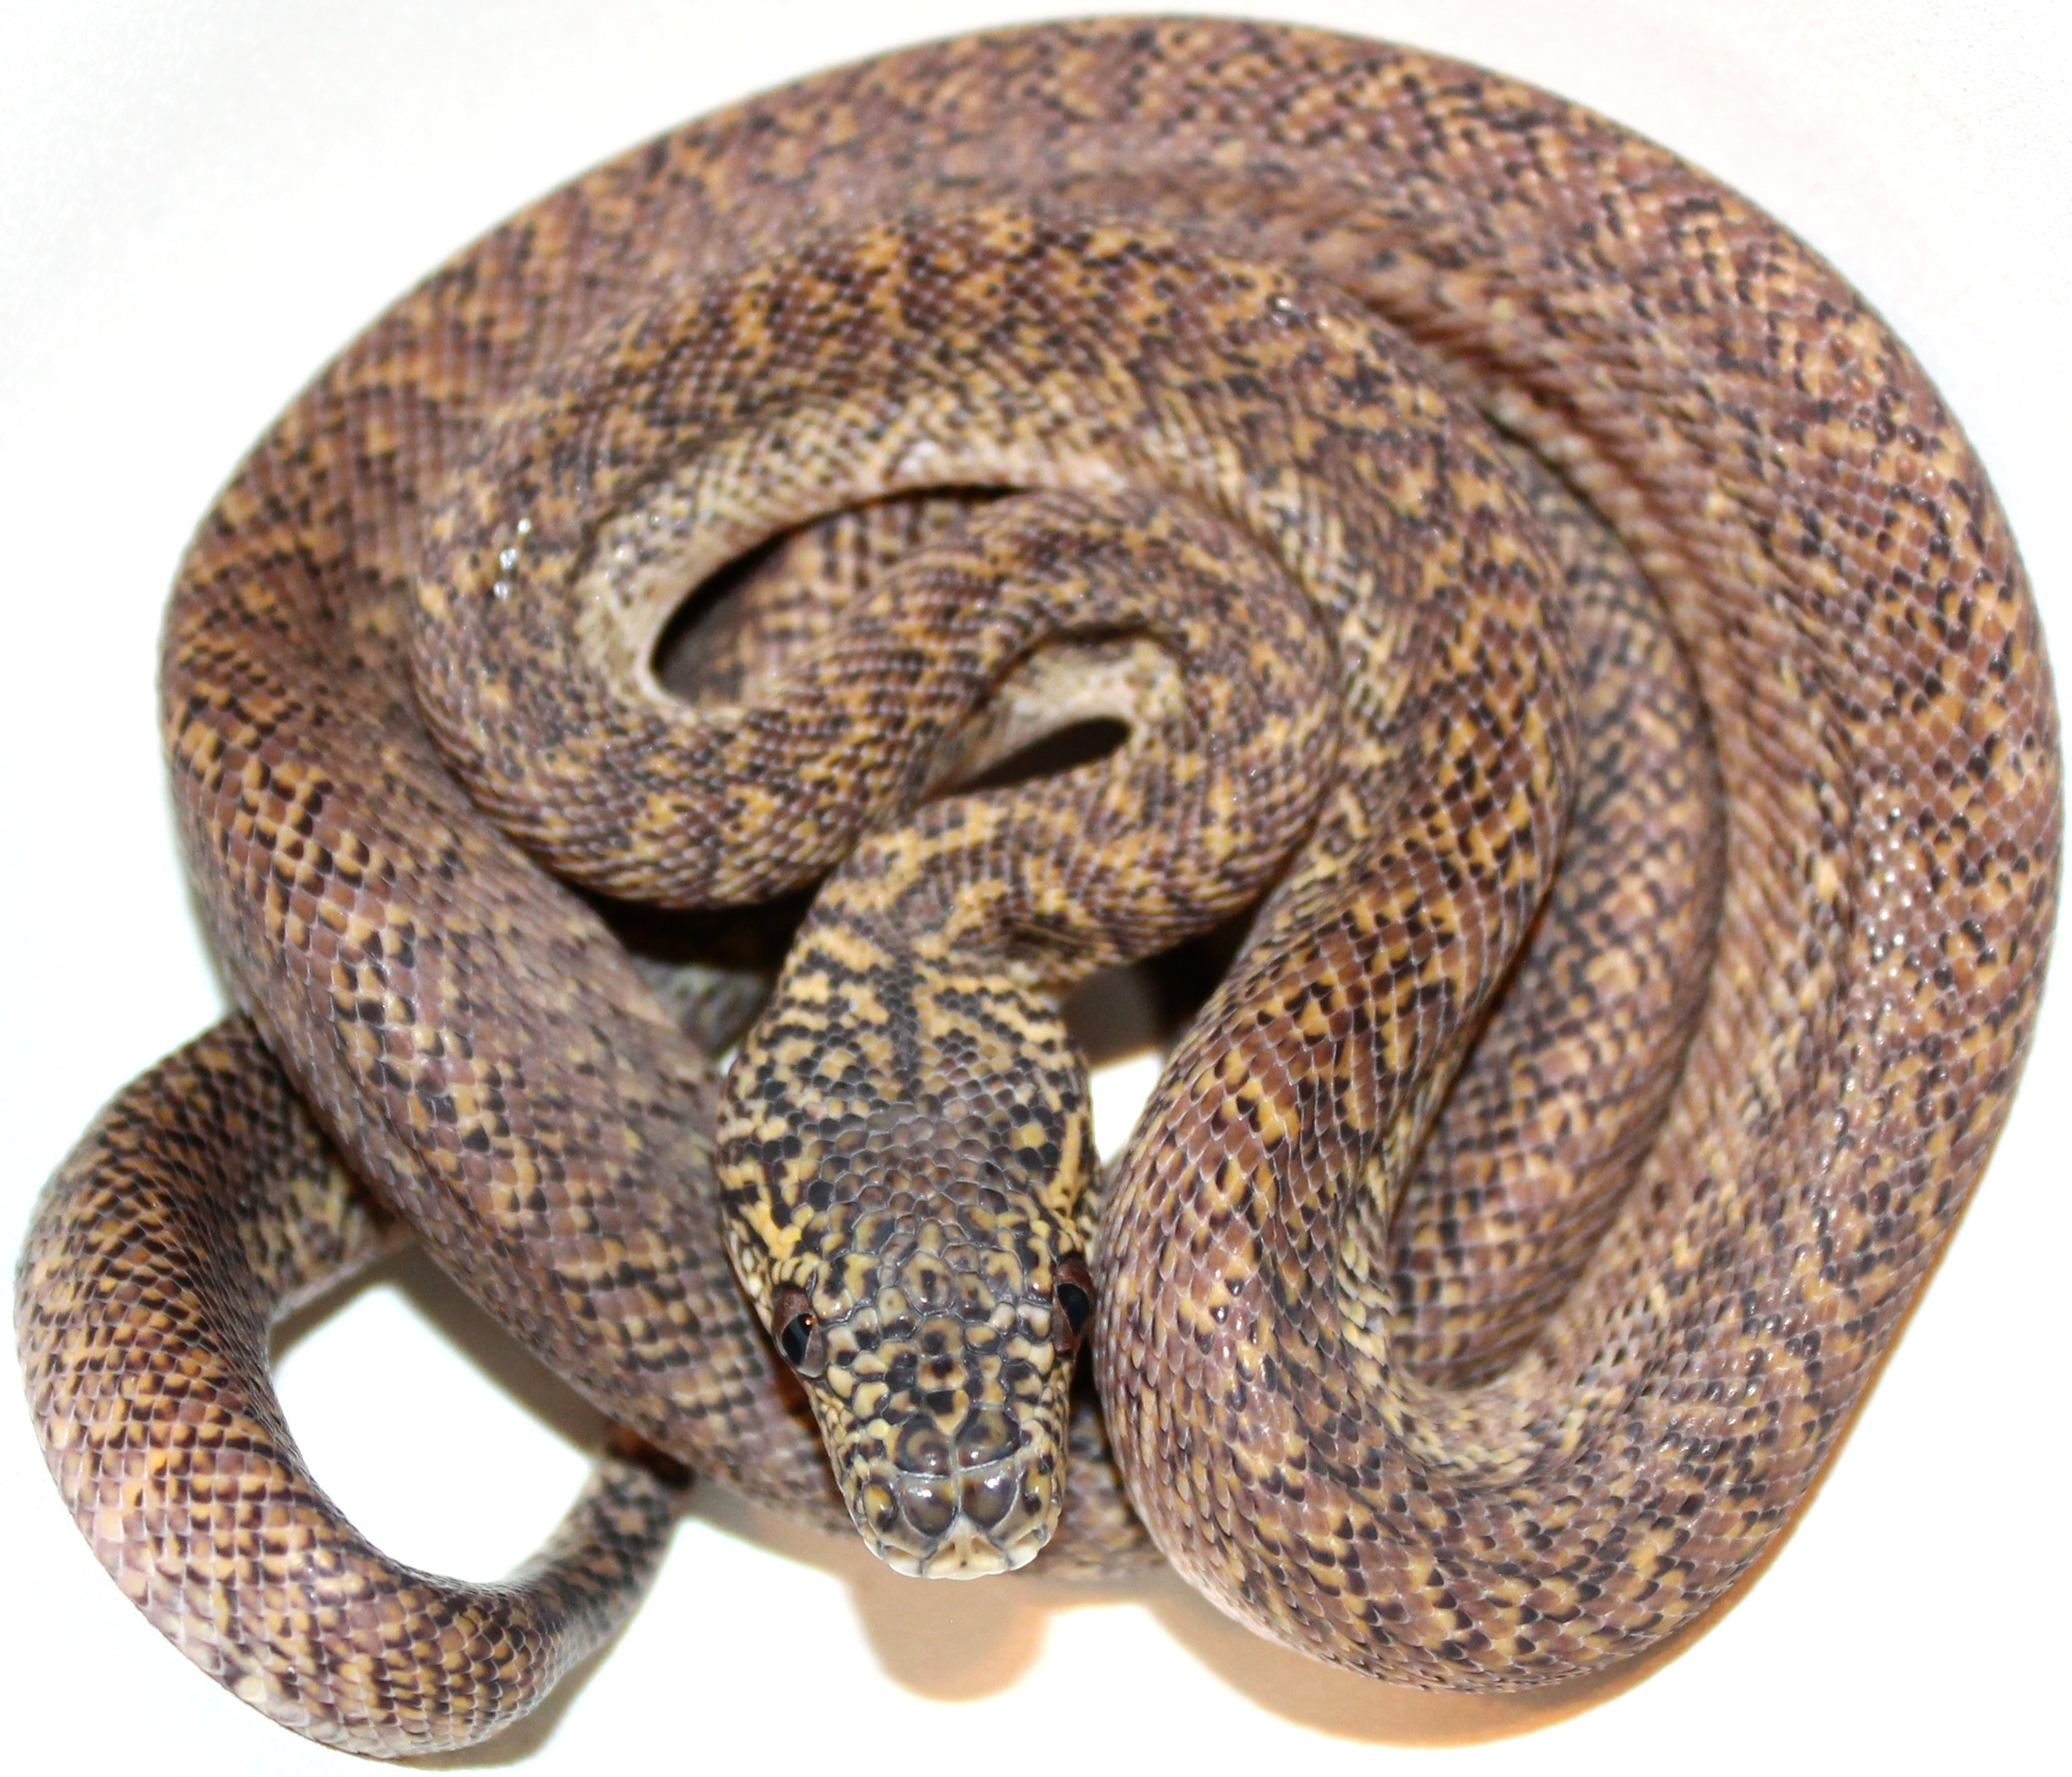 Female Granite Irian Jaya Carpet Python by Inland Reptile